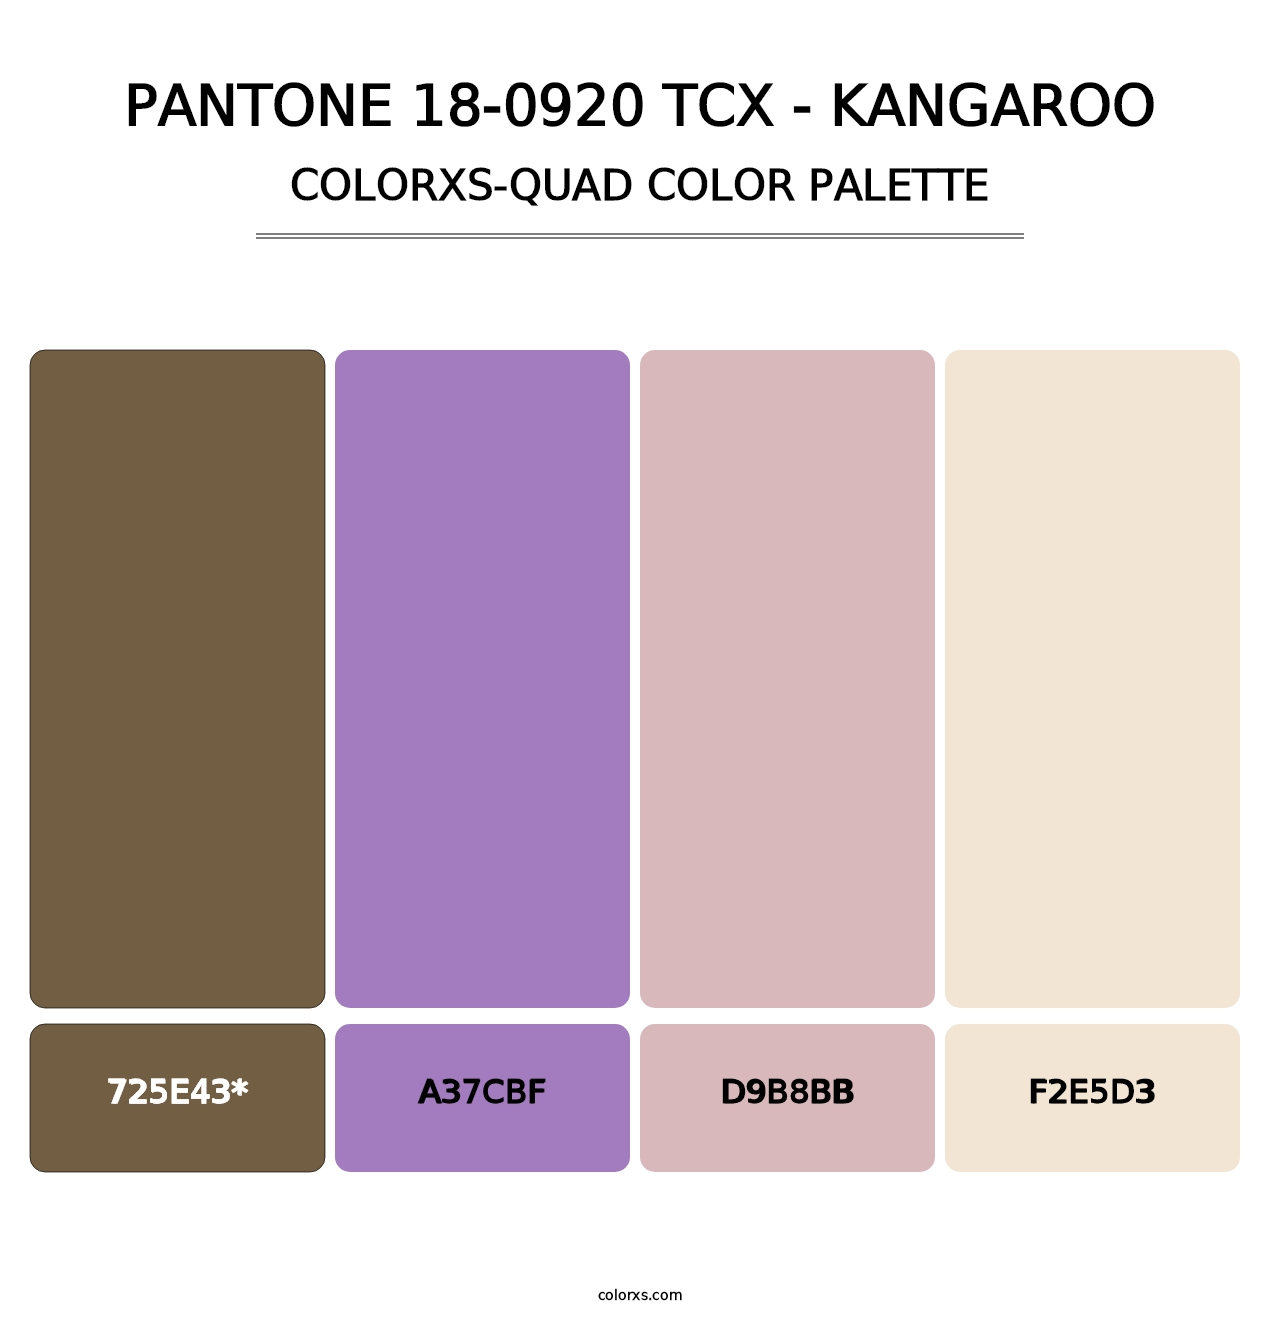 PANTONE 18-0920 TCX - Kangaroo - Colorxs Quad Palette